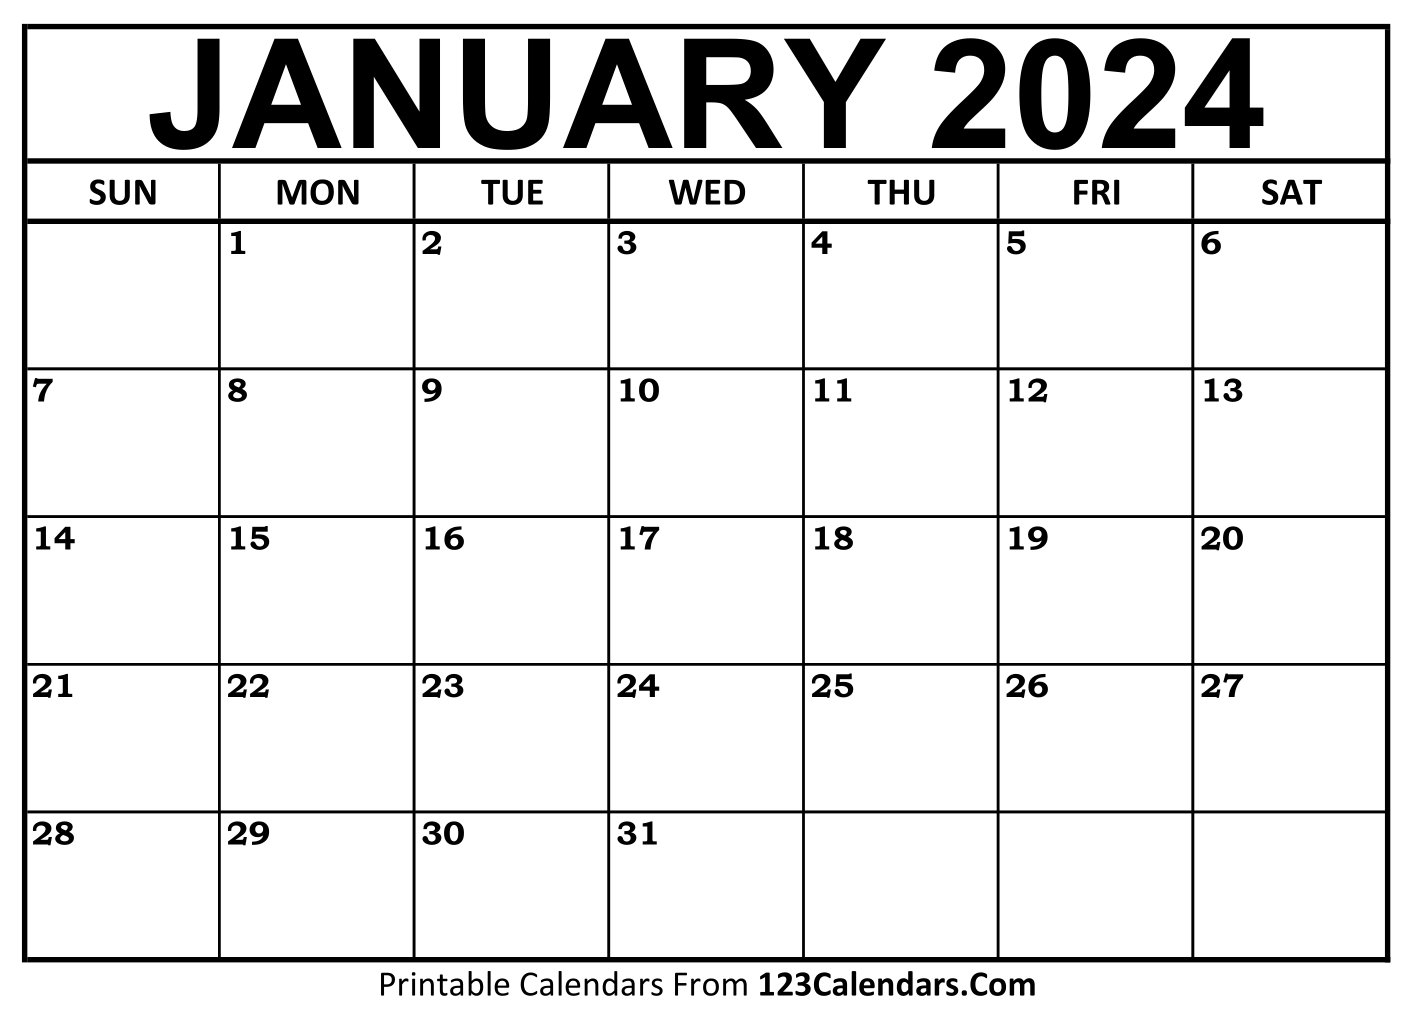 Printable January 2024 Calendar Templates - 123Calendars for Printable Free January 2024 Calendar